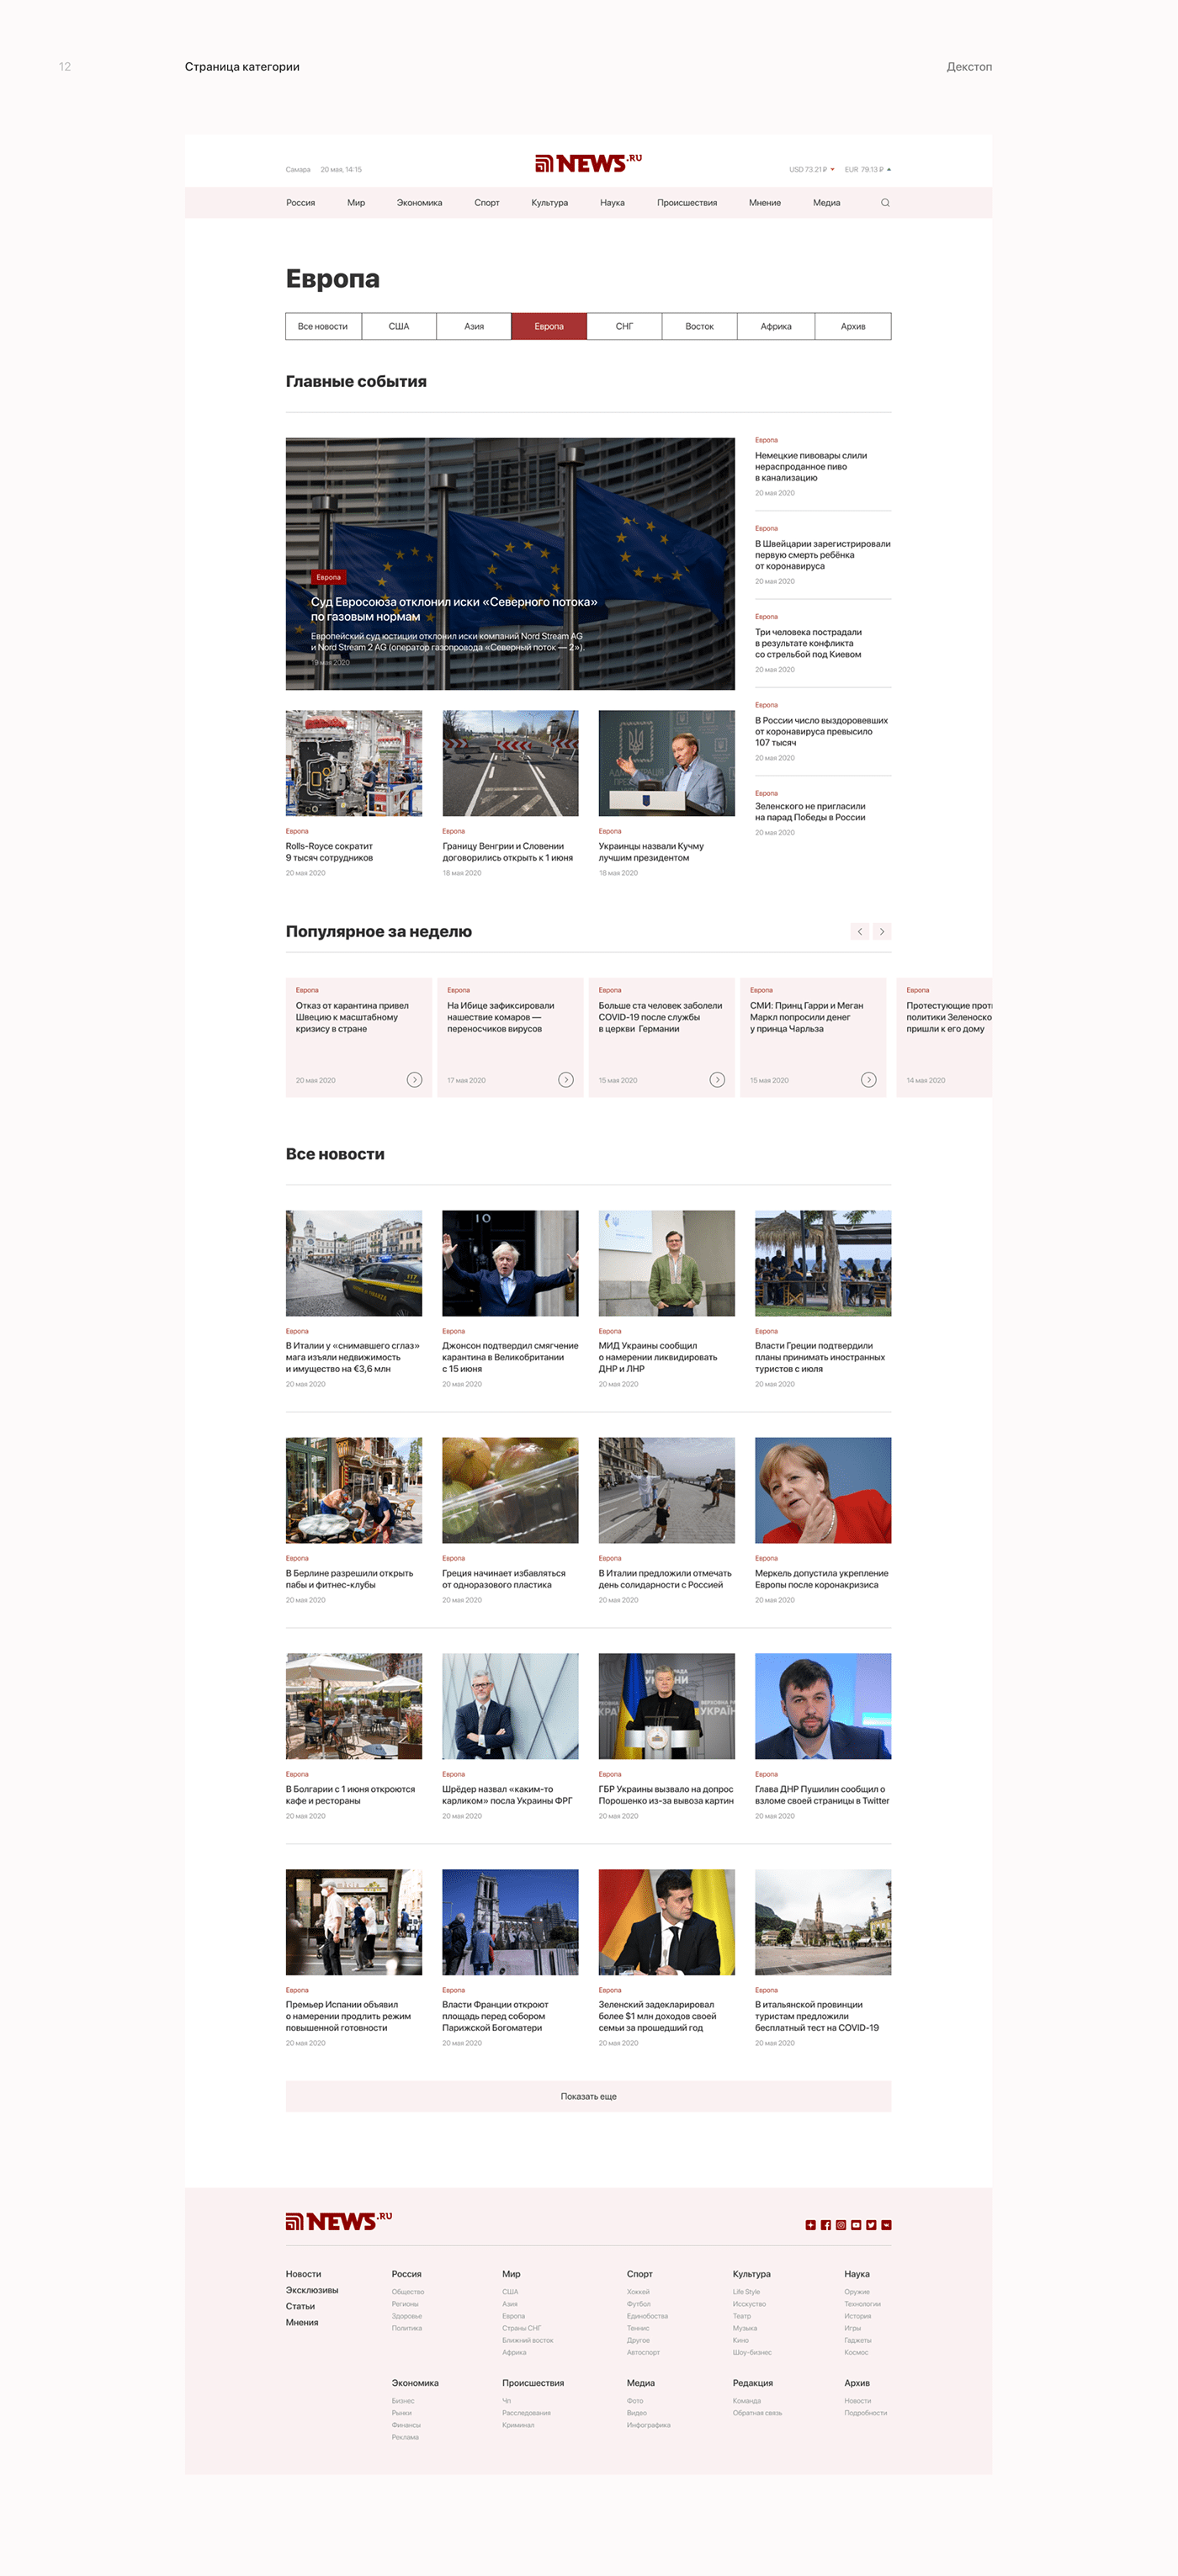 news News Portal online portal redesign UI ux Web Design 